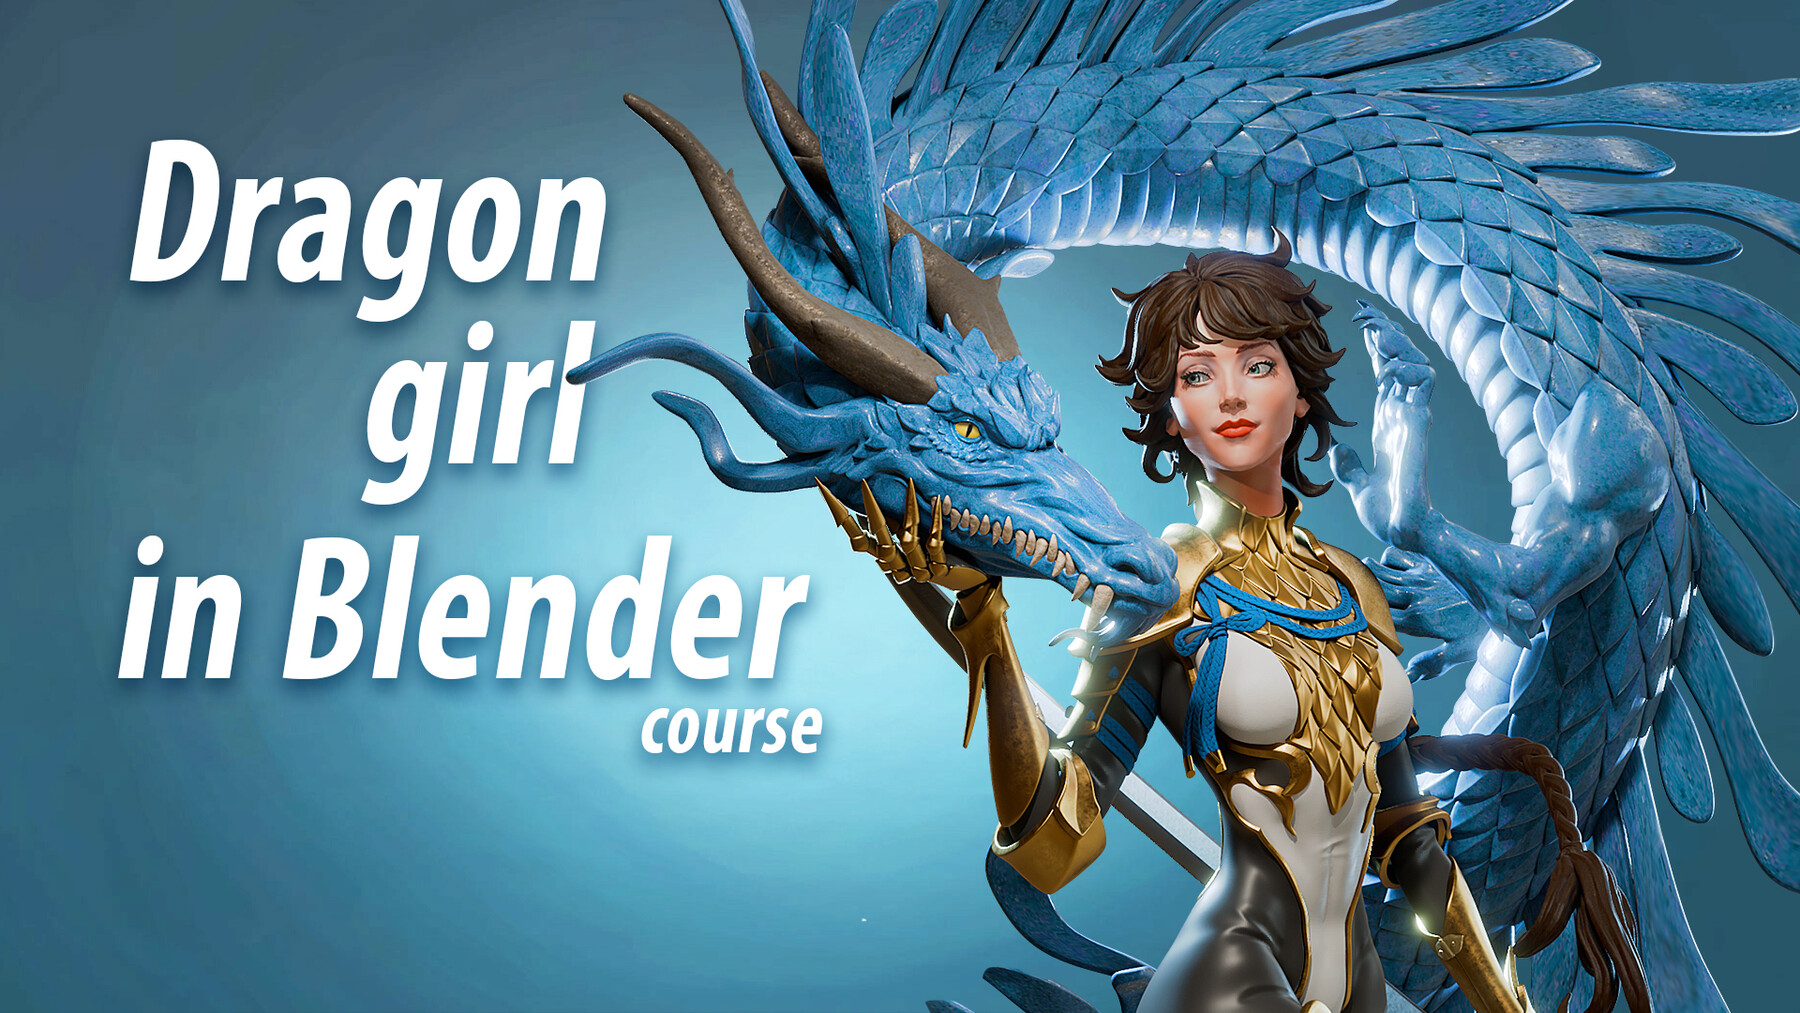 Blender龙女人物角色雕刻建模材质灯光渲染教程 中英文字幕 Dragon girl in Blender course插图